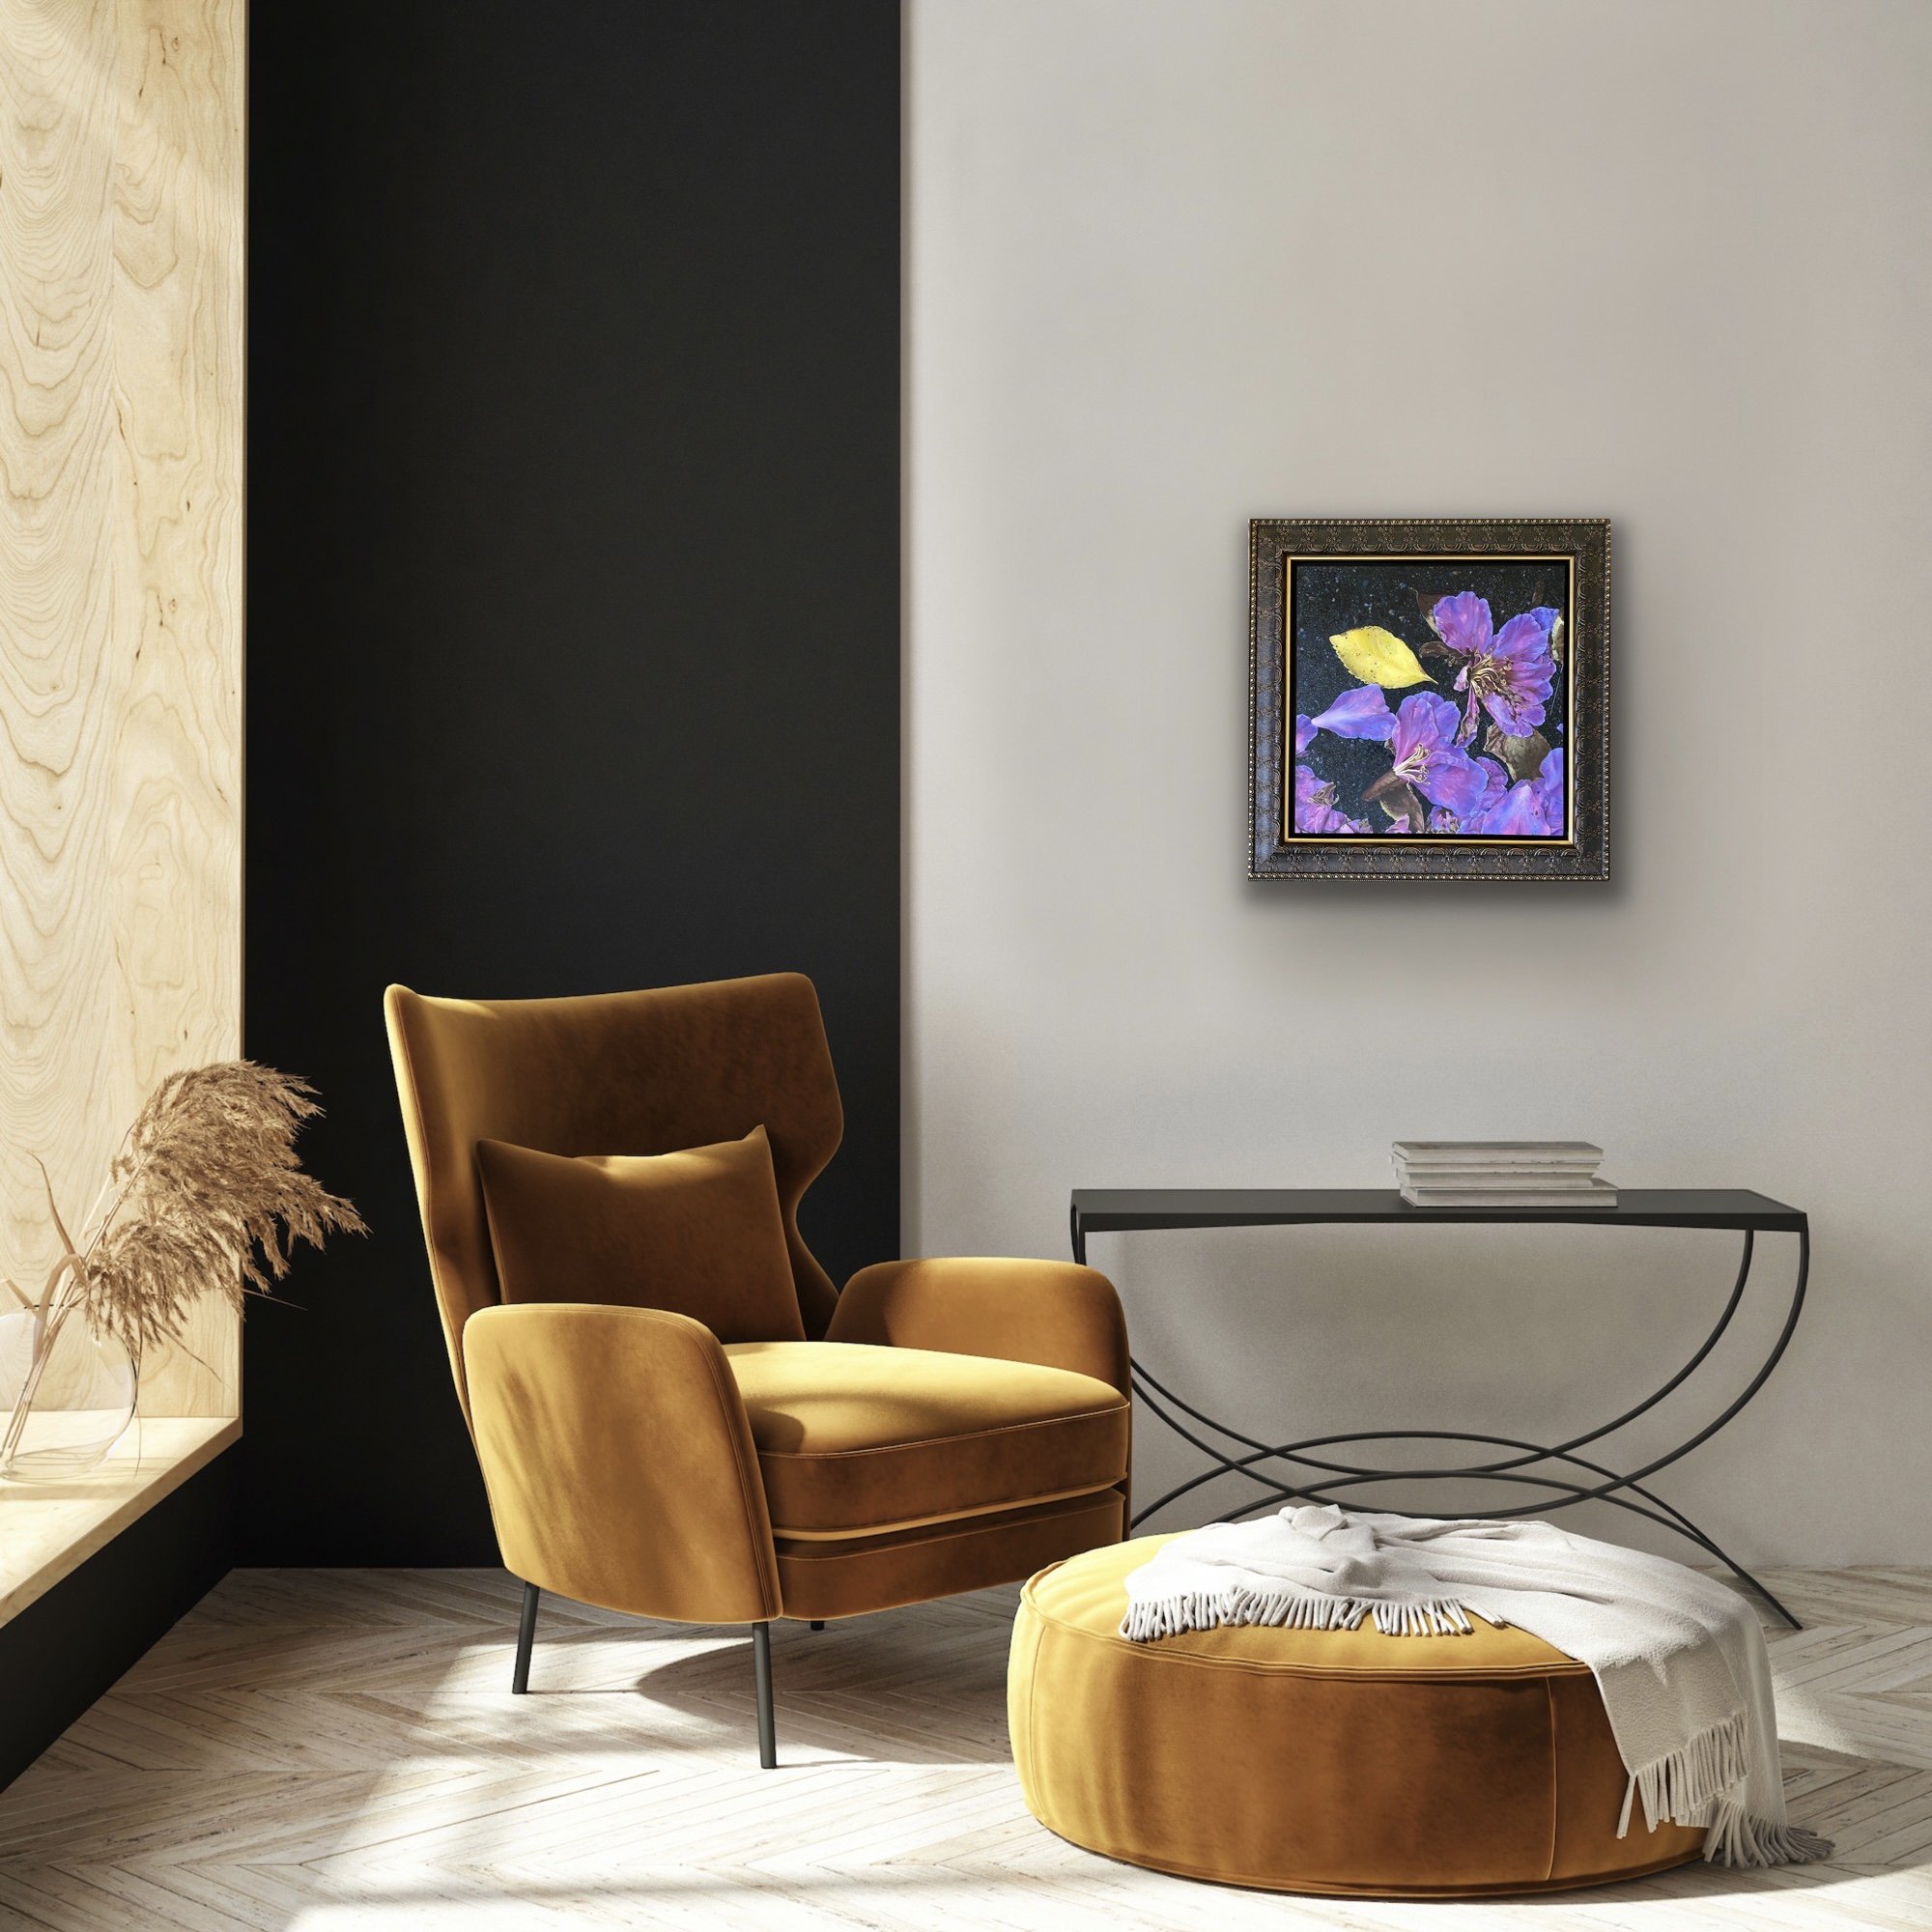 D Liguori Art and Story_Raining Petals_24x24 Oil on Canvas_Framed_Amber Chair.jpg